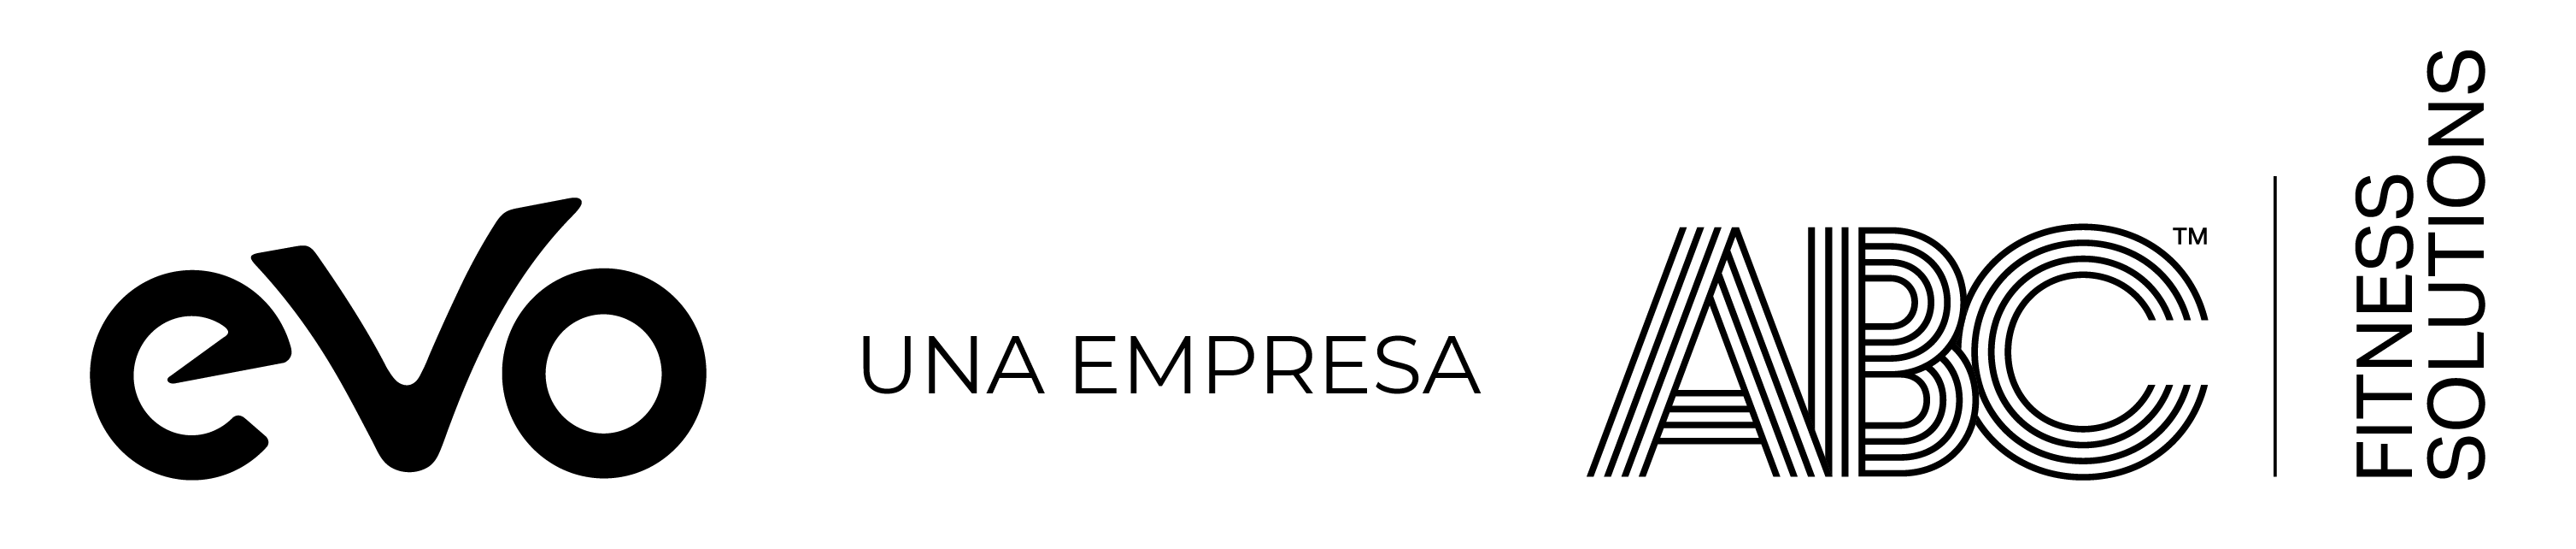 Logo EVO una empresa ABC negro